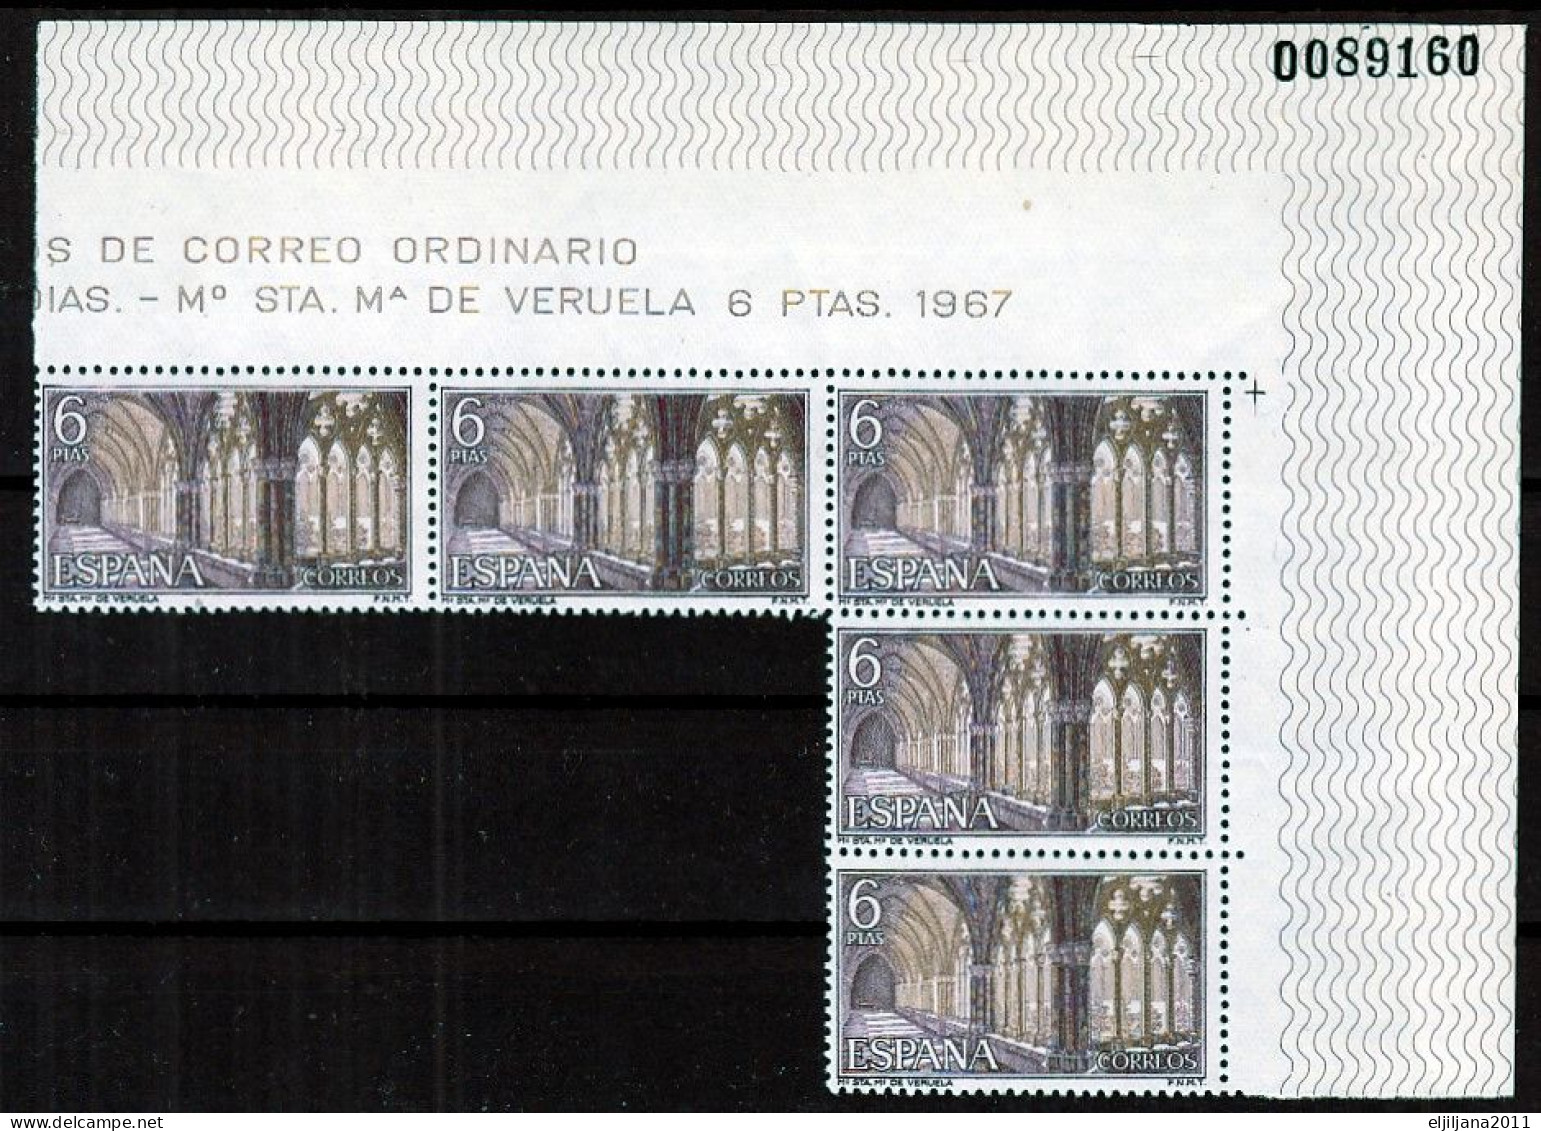 ⁕ SPAIN / ESPANA 1967 ⁕ Monasteries And Abbeys Mi.1728 - 1730 X 5 ⁕ MNH - See Scan - Ongebruikt